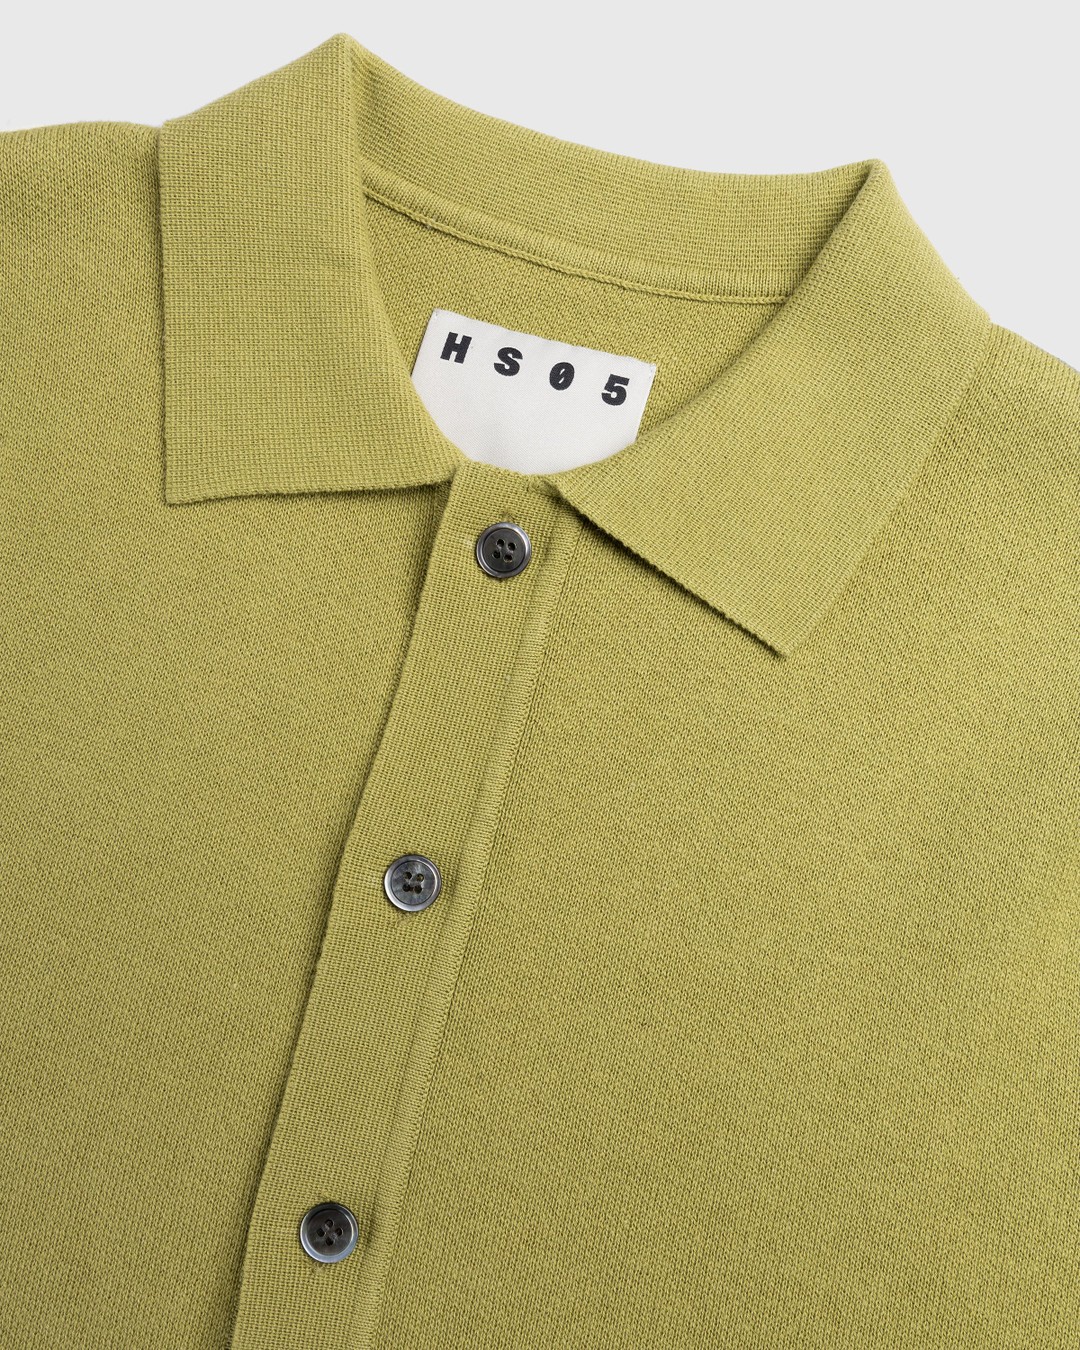 Highsnobiety HS05 – Cotton Knit Shirt Green - Shirts - Green - Image 6